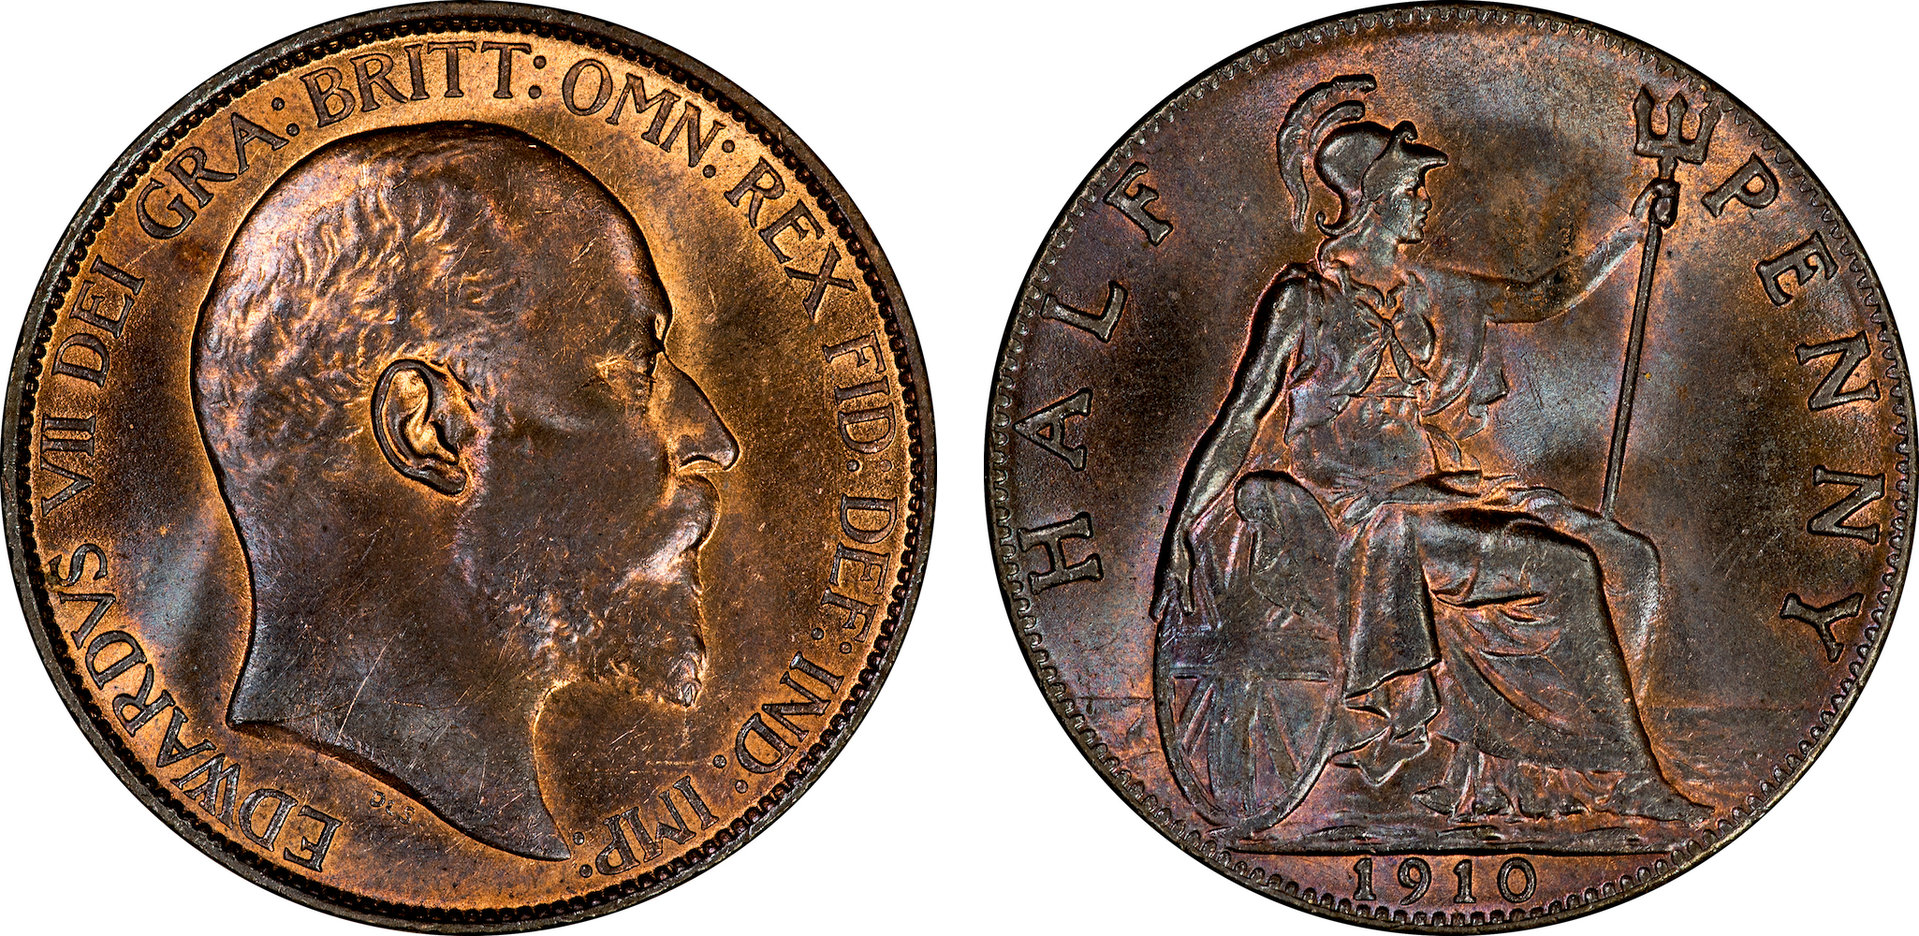 Great Britain - 1910 Half Penny.jpg